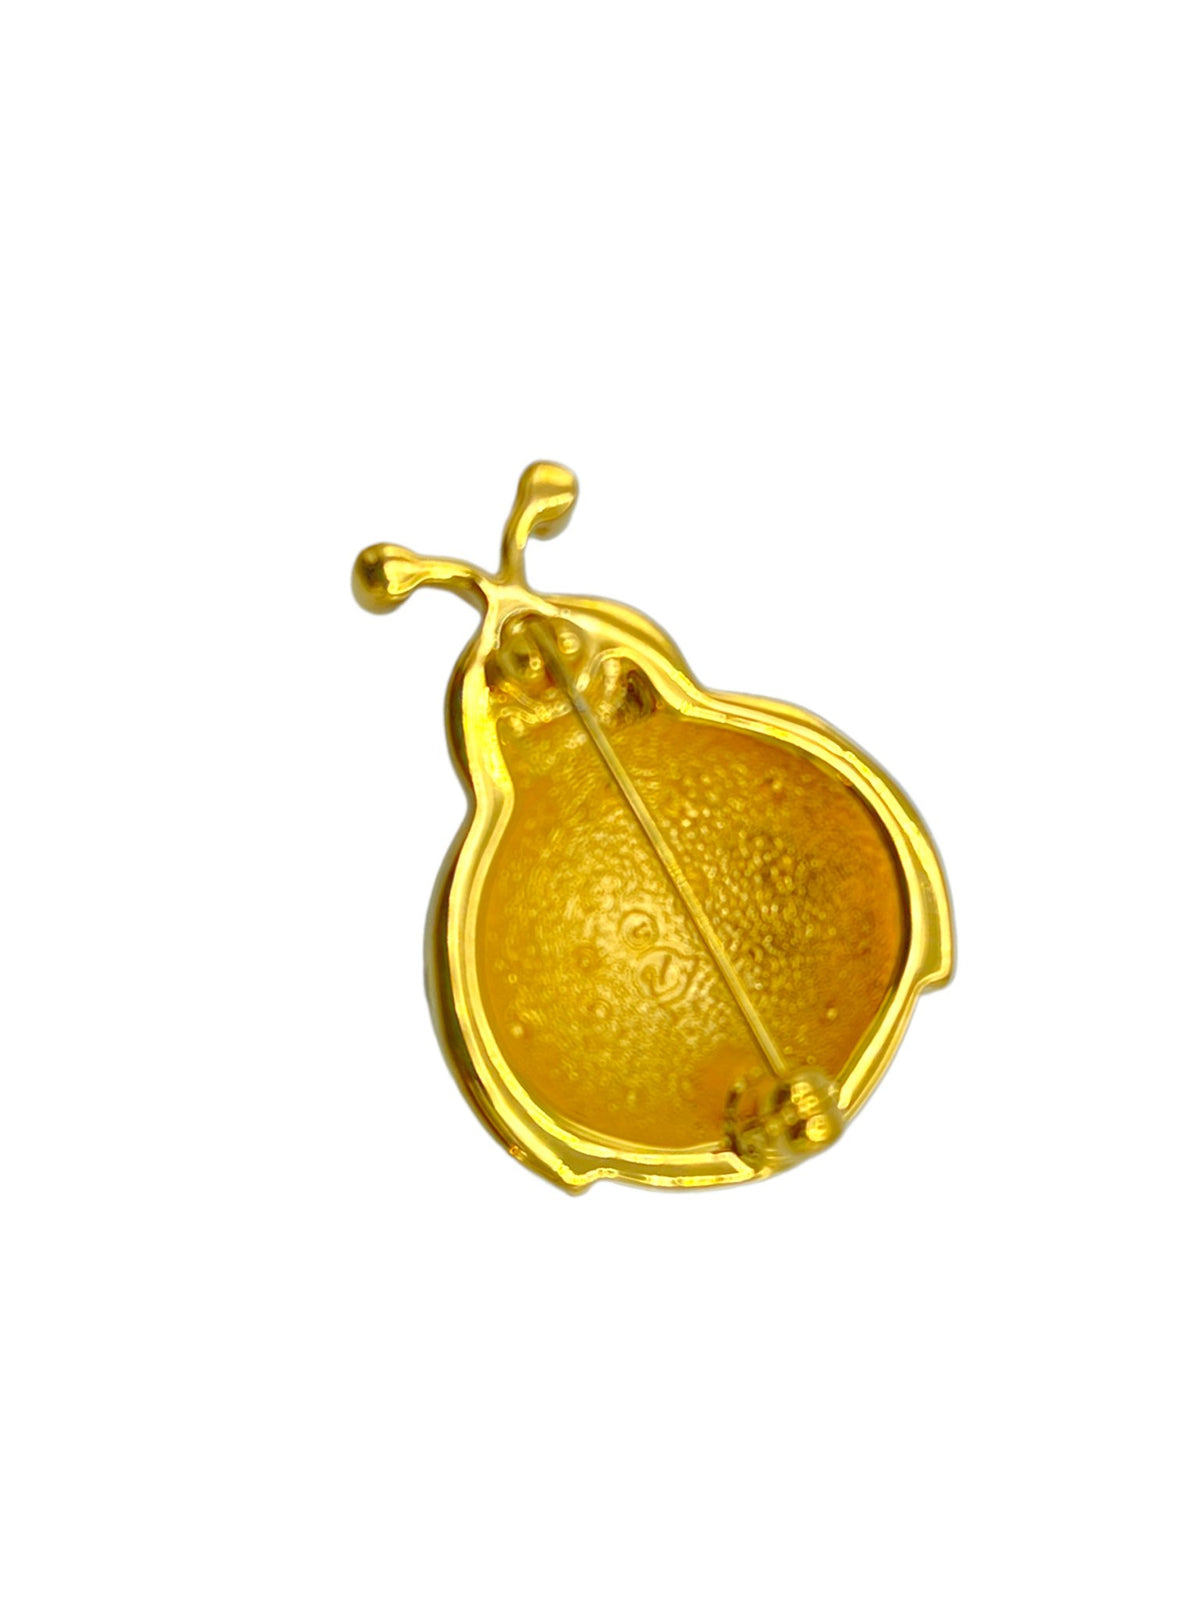 Gold Swarovski Petite Pave Ladybug Rhinestone Brooch - 24 Wishes Vintage Jewelry